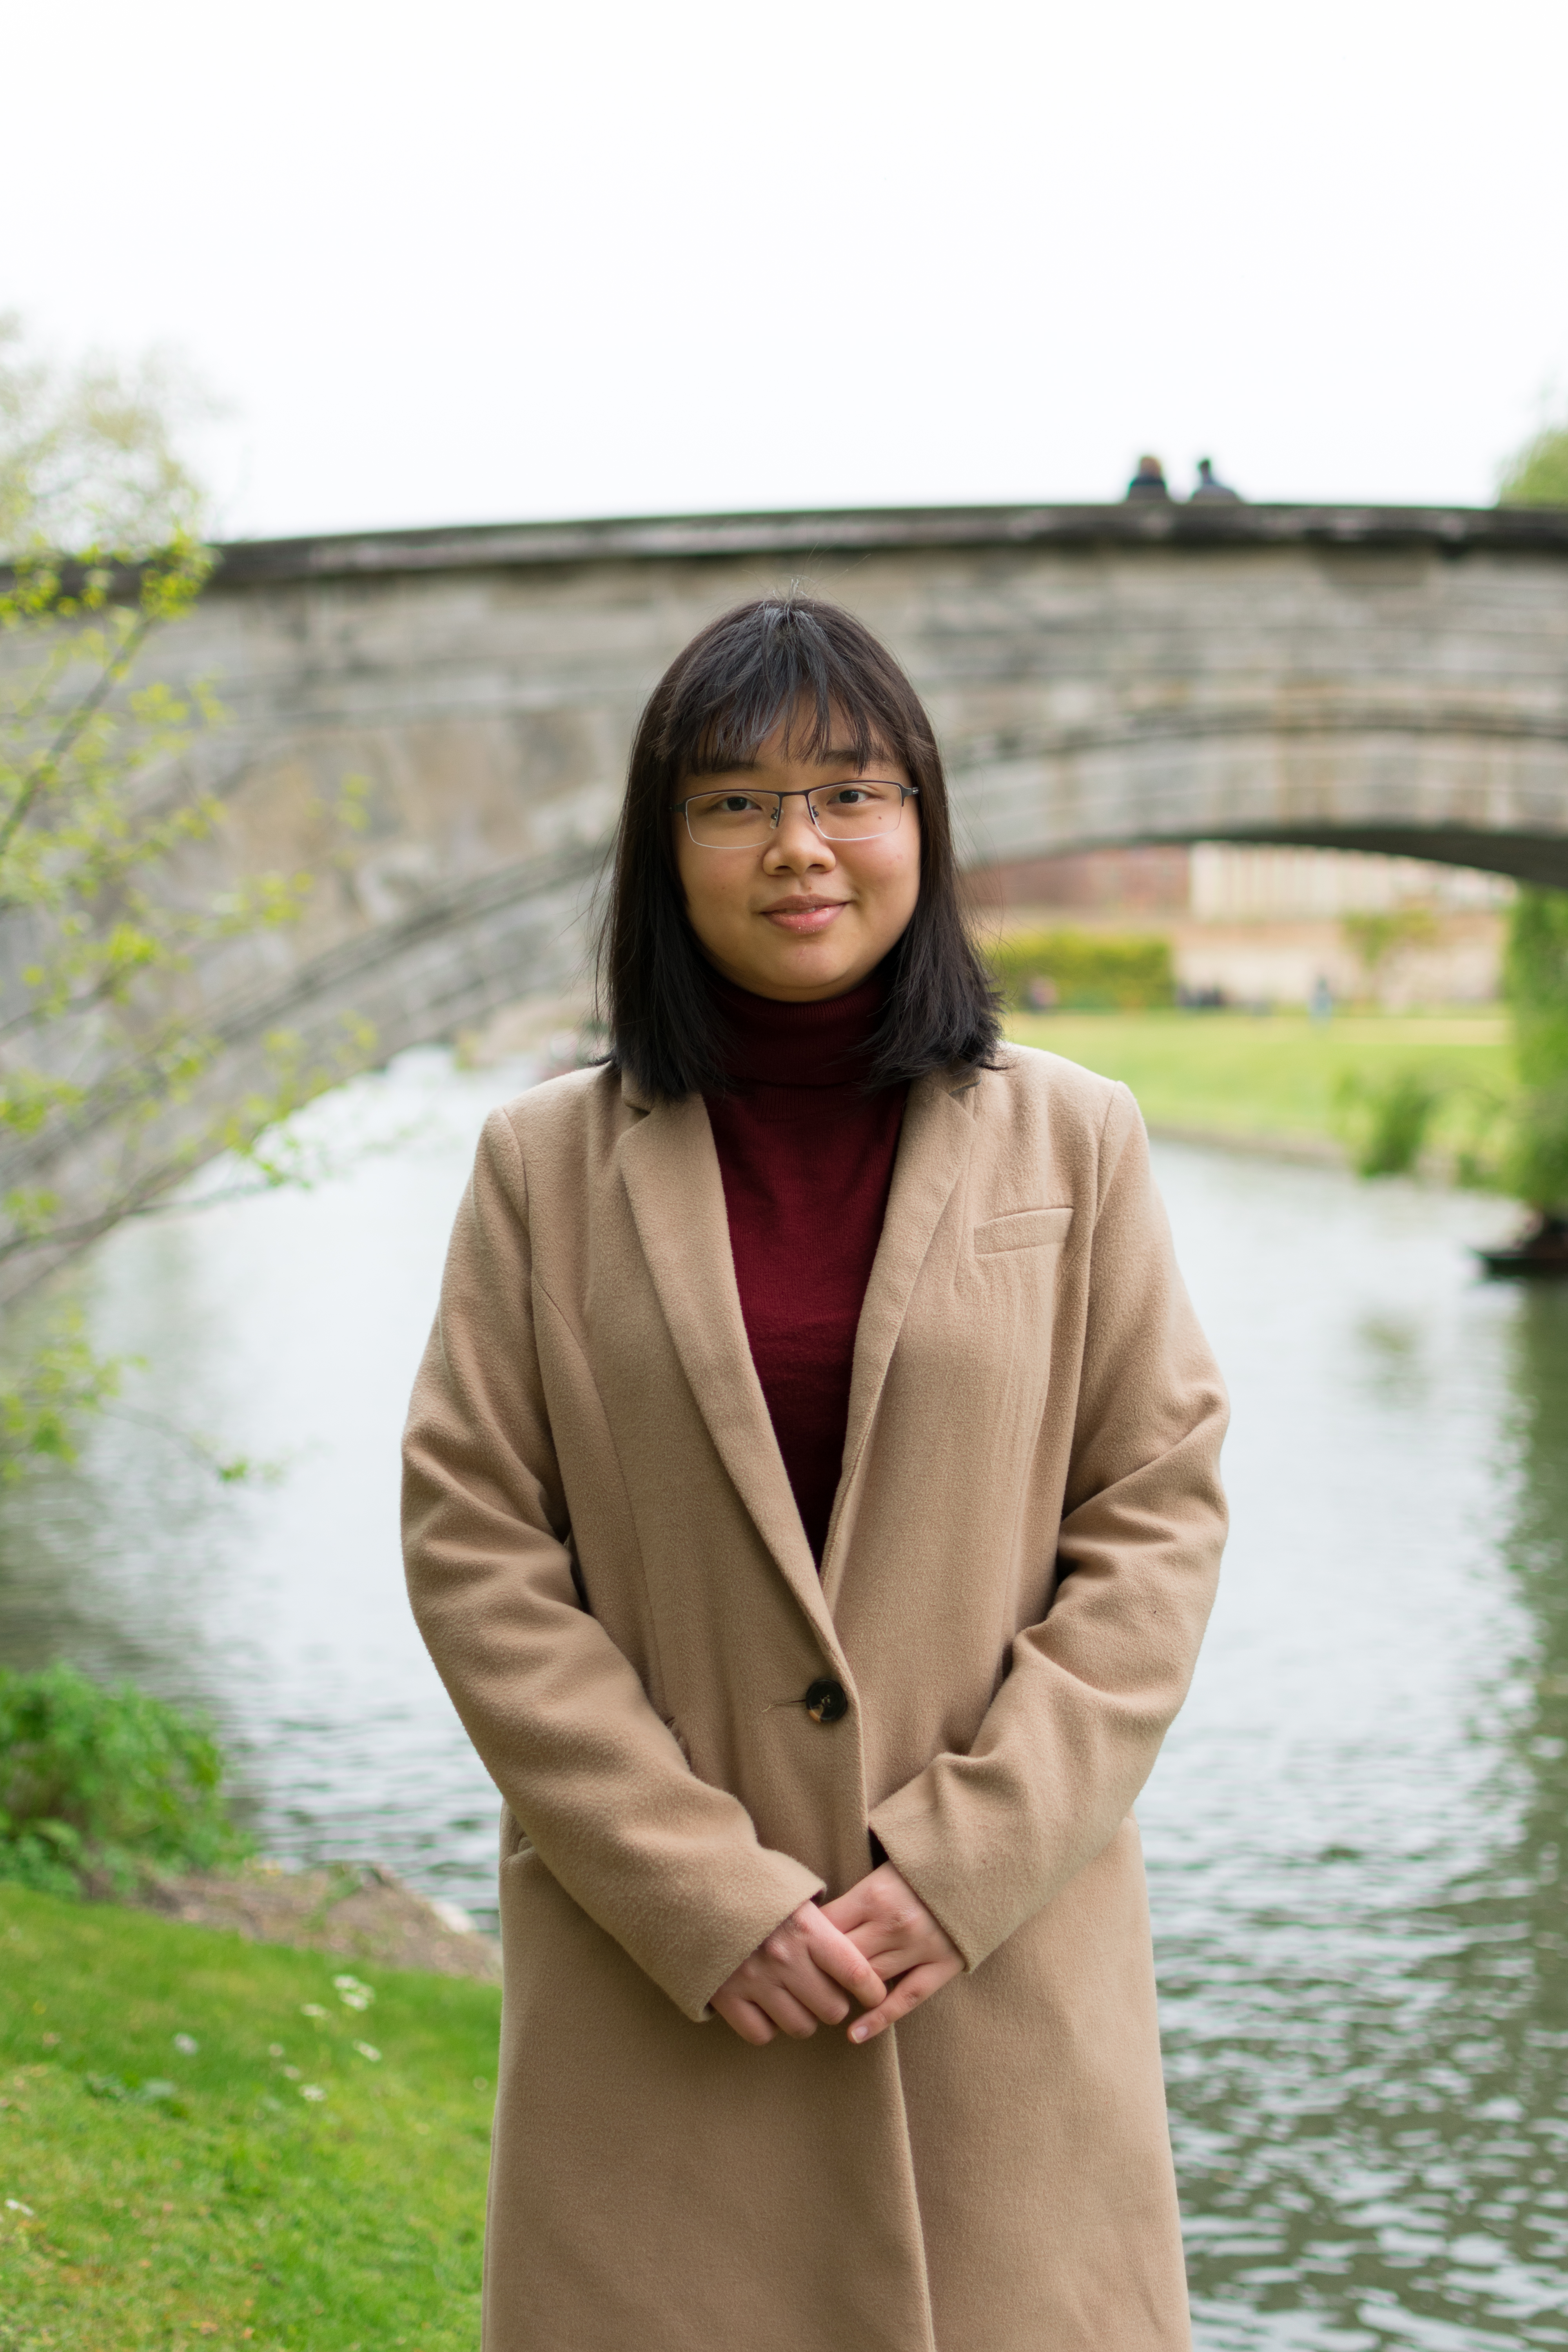 Alumni Officer - Stephanie Chng